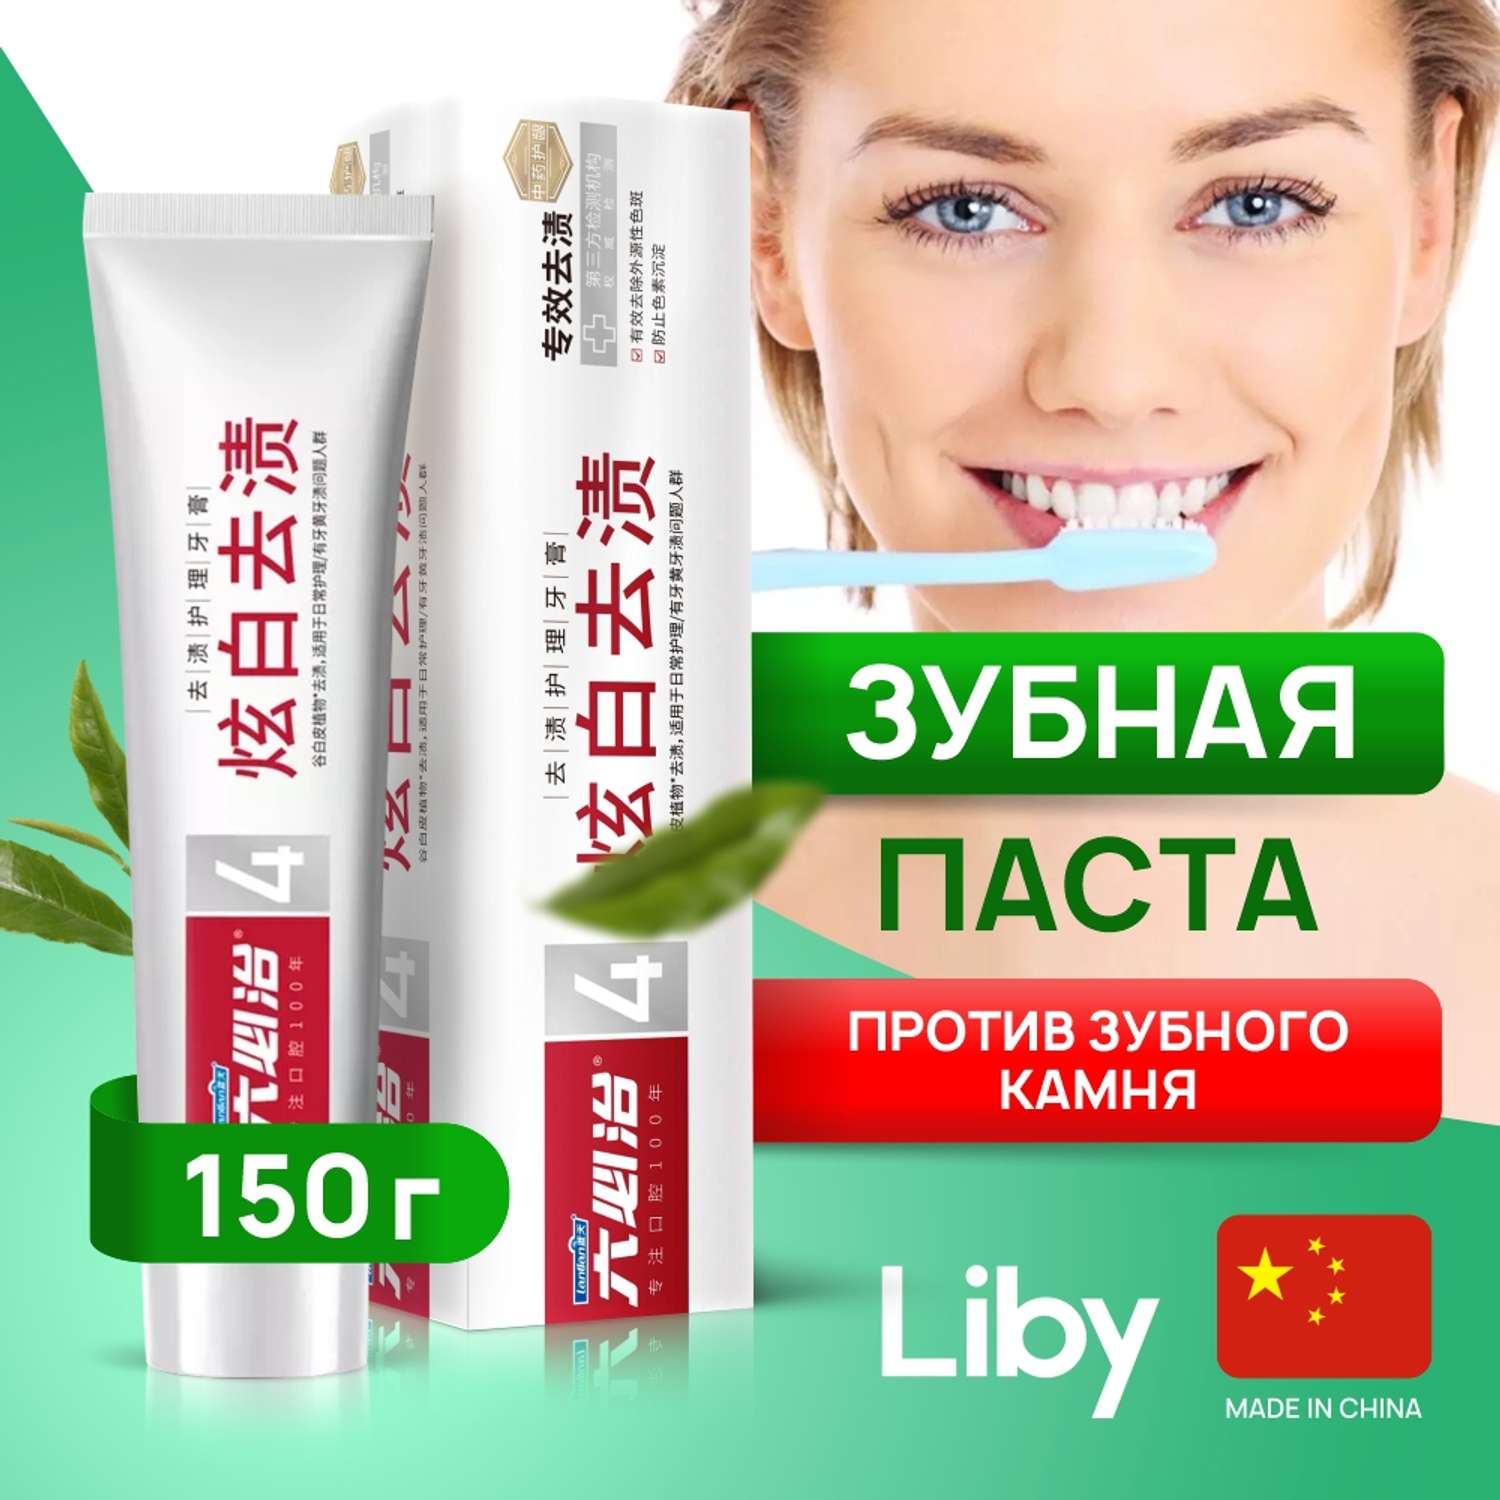 Зубная паста Liby против образования зубного камня stain removal 150 гр - фото 1